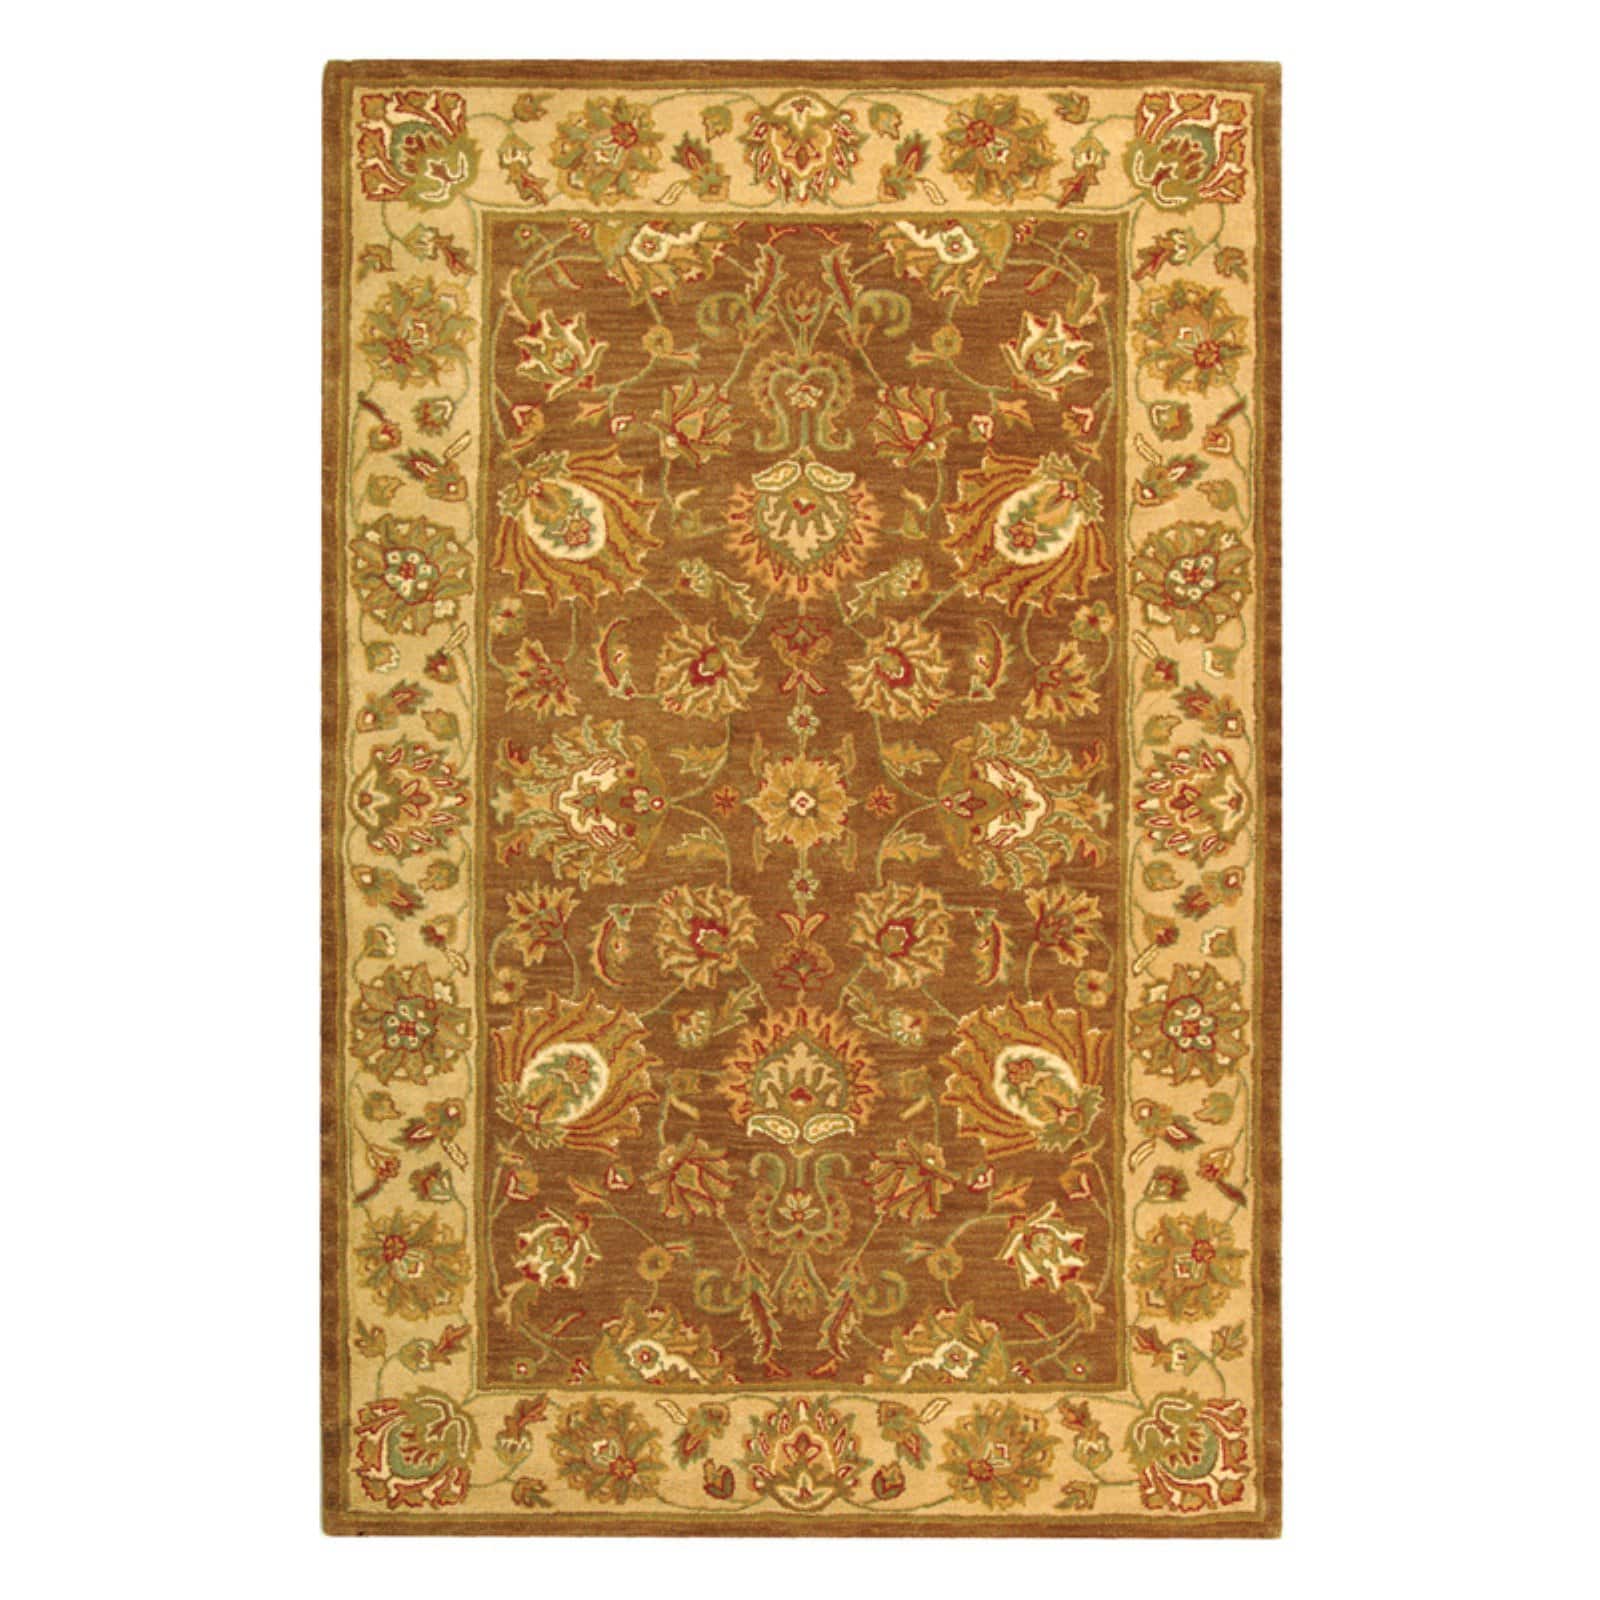 SAFAVIEH Heritage Regis Traditional Wool Area Rug, Brown/Ivory, 2'3" x 4' - image 4 of 9